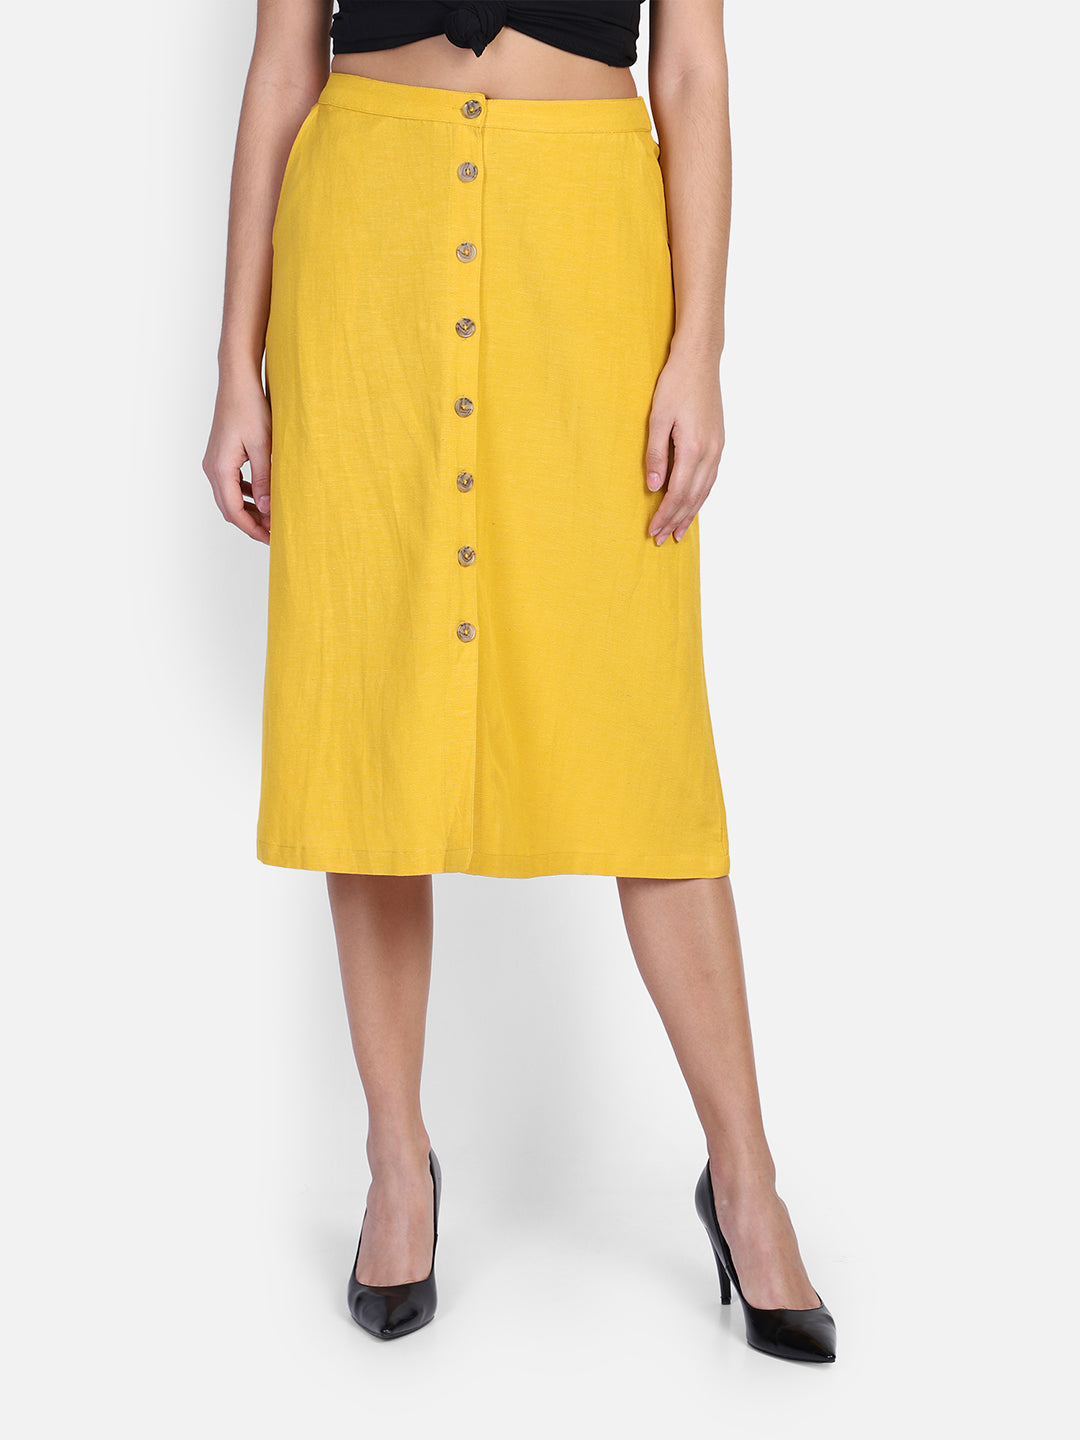 Yellow A-Line Skirt - Aditi Wasan